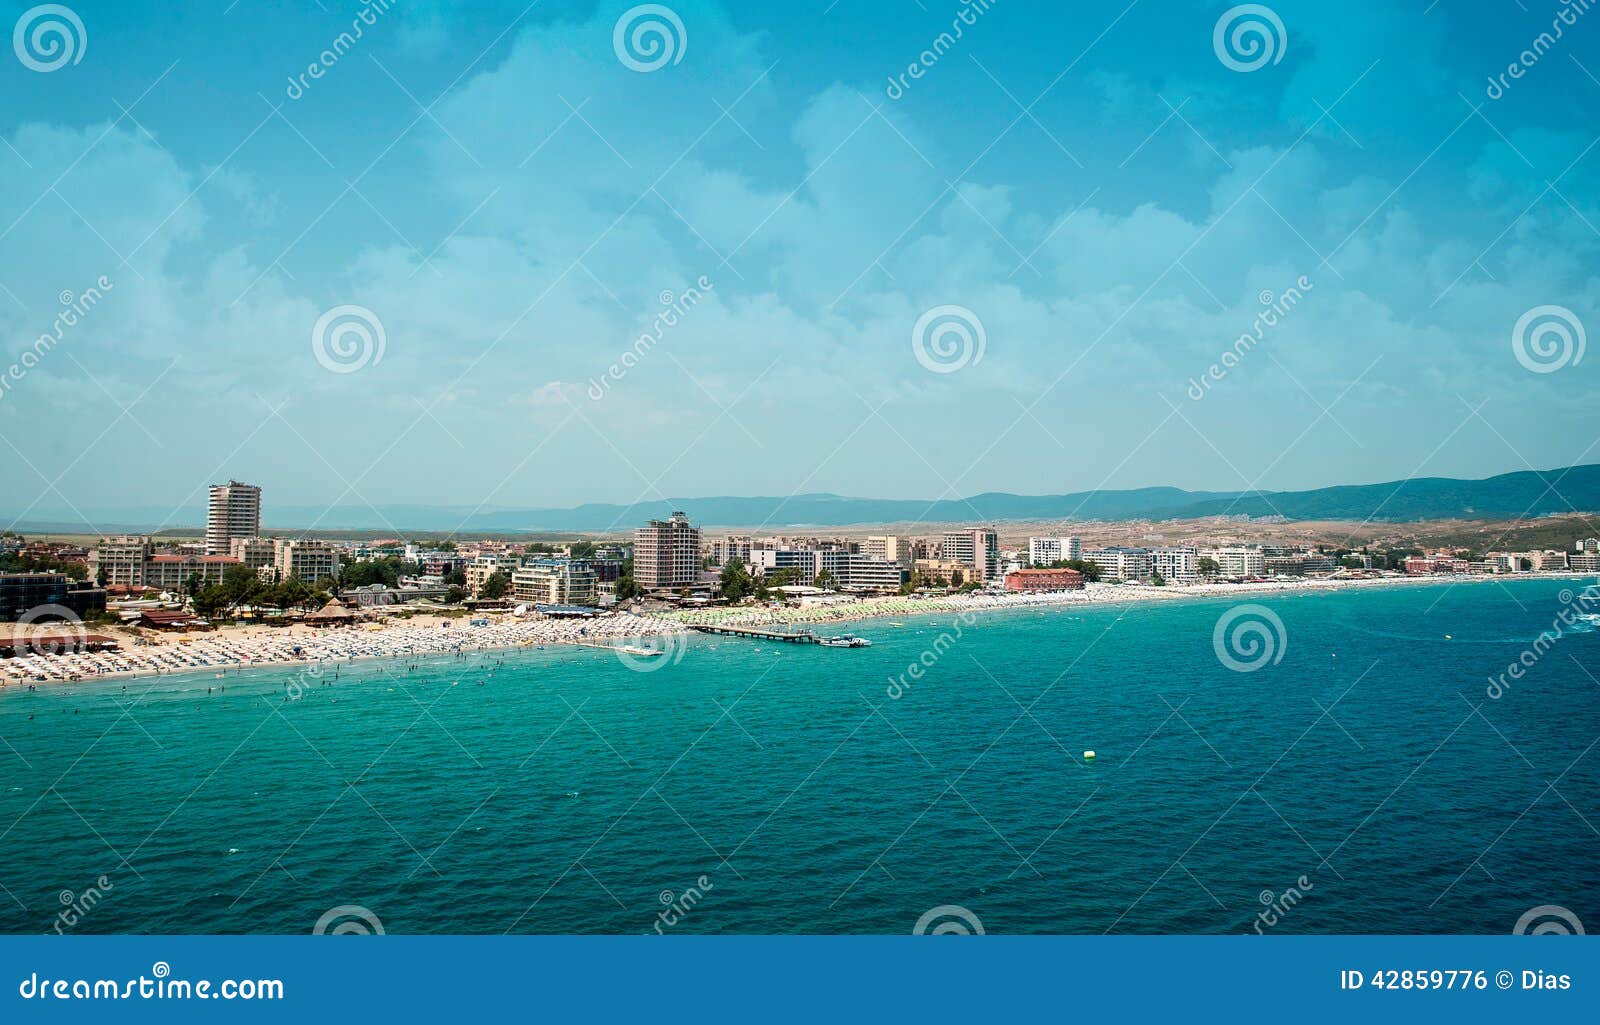 sunny beach resort in bulgaria